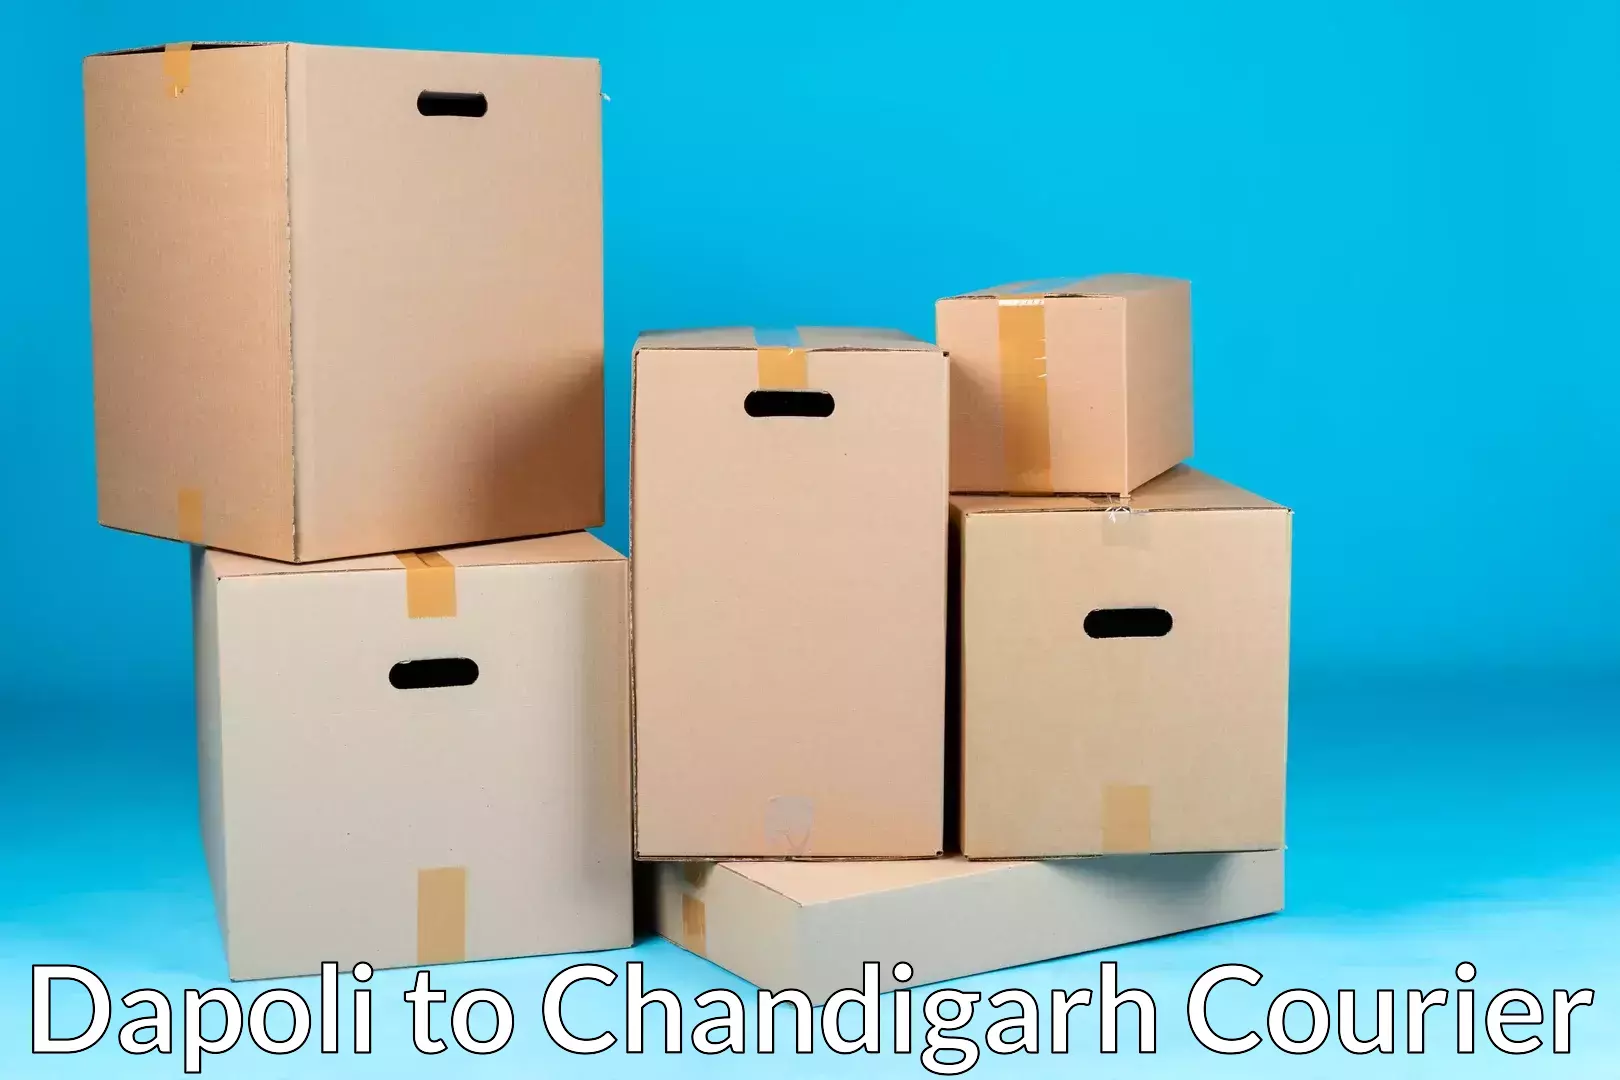 Furniture delivery service Dapoli to Chandigarh